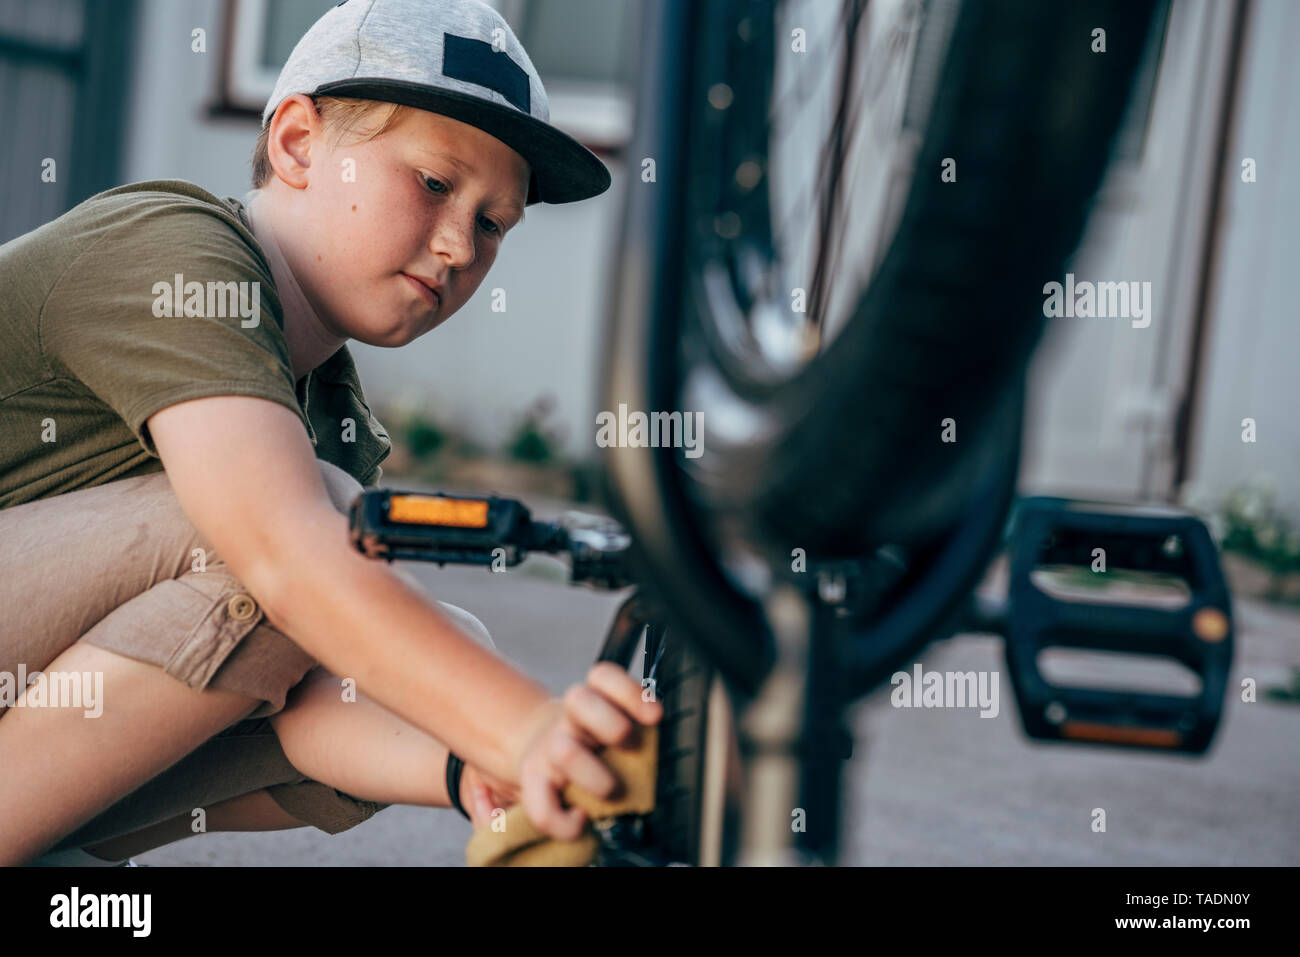 Boy cleaning bmx bike on yard Stock Photo